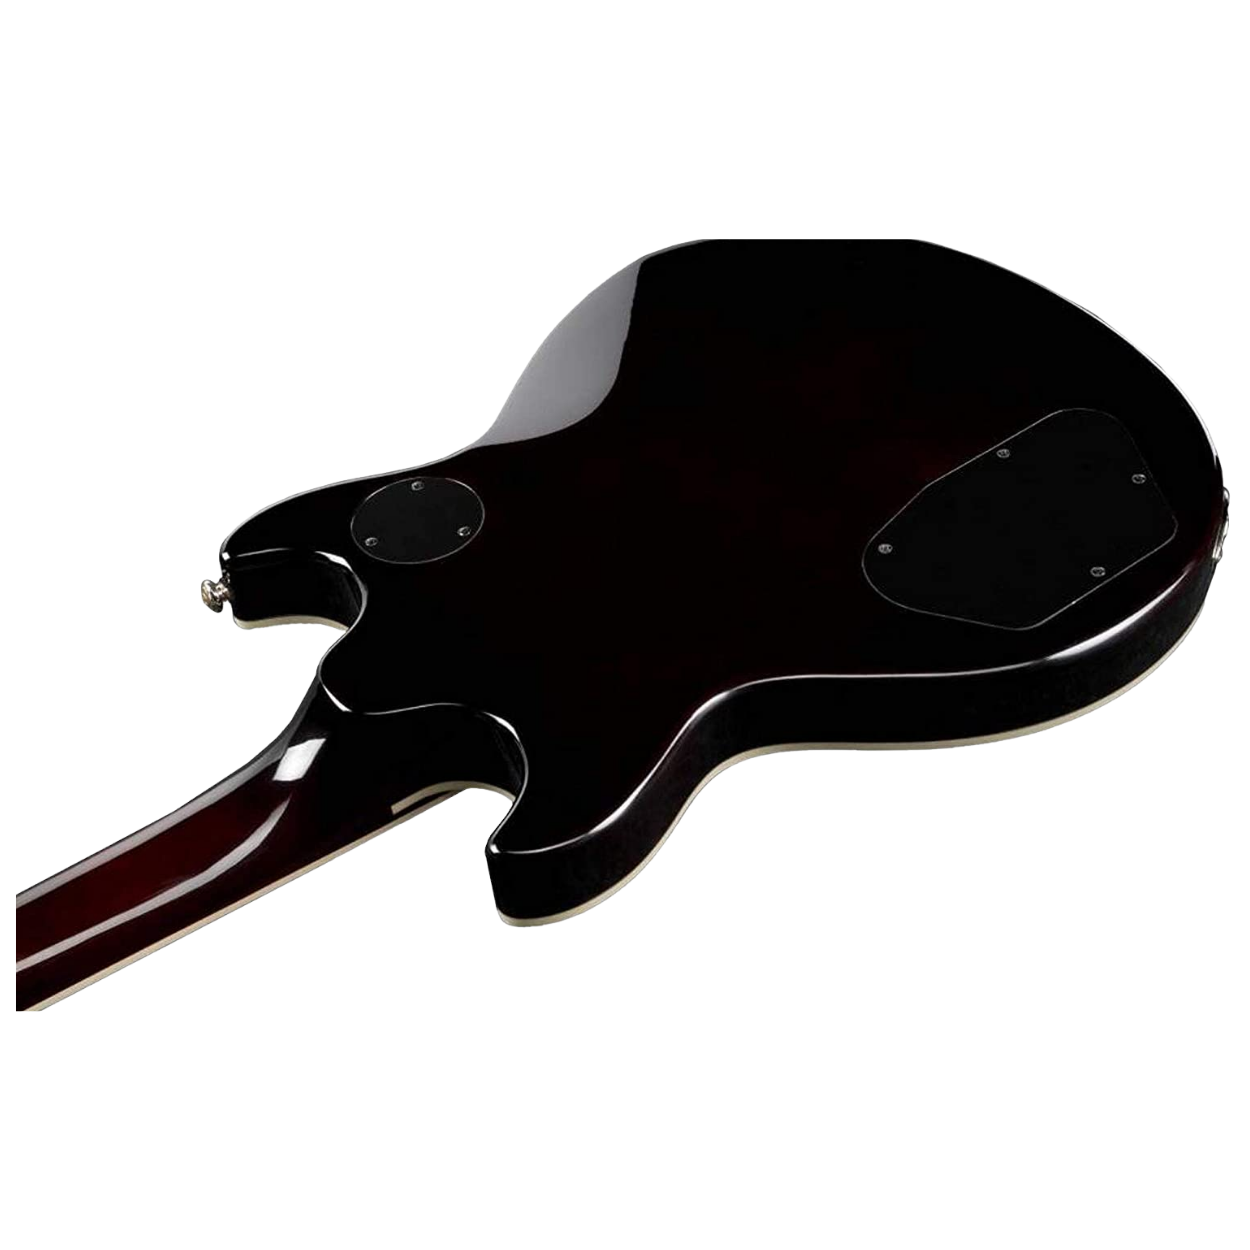 Ibanez Standard Ar520h Semi-hollowbody Electric Guitar, Black